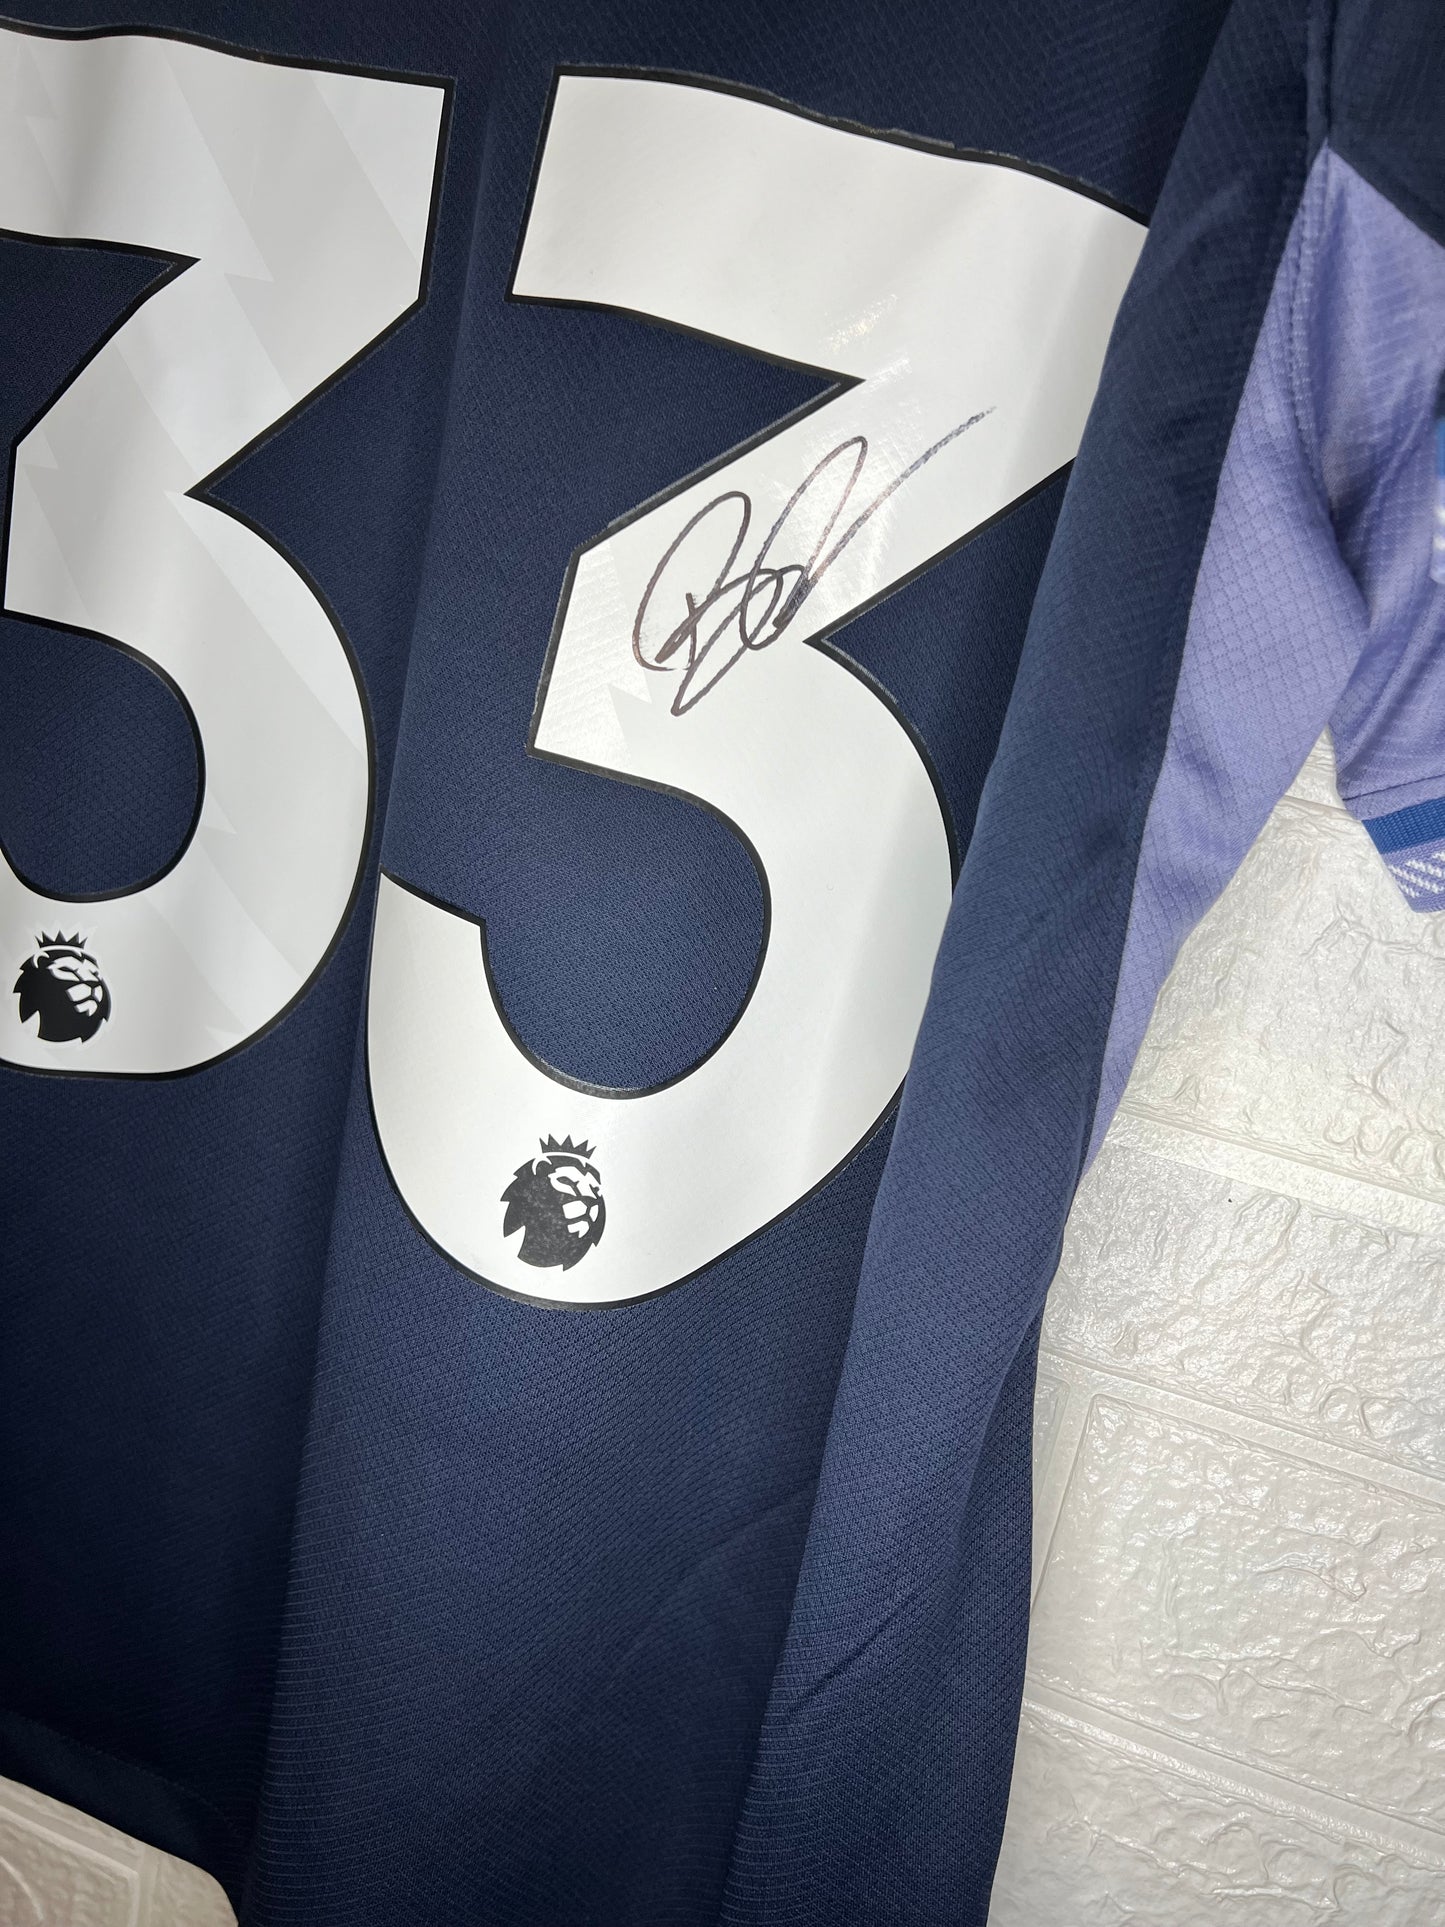 Ben Davies signed Tottenham shirt pre order